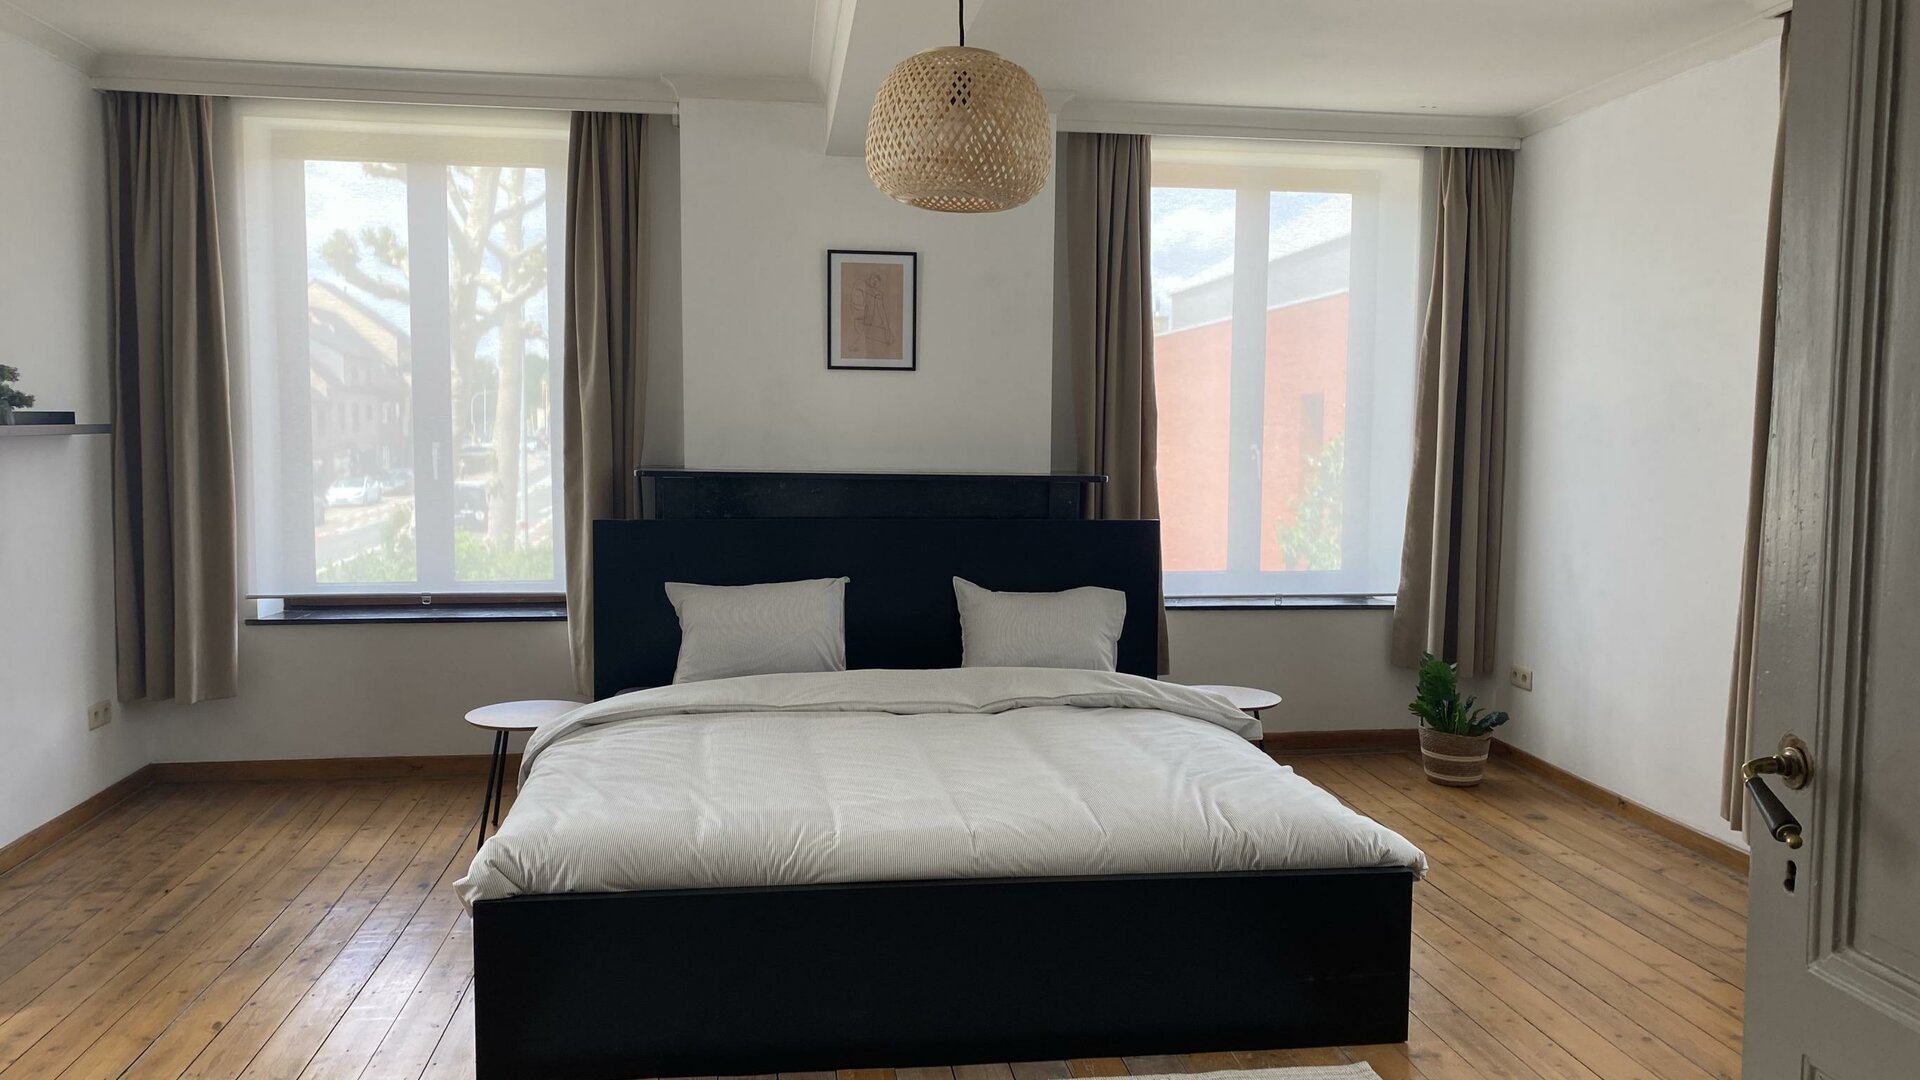 Huis Louis - vakantiewoning - master bedroom